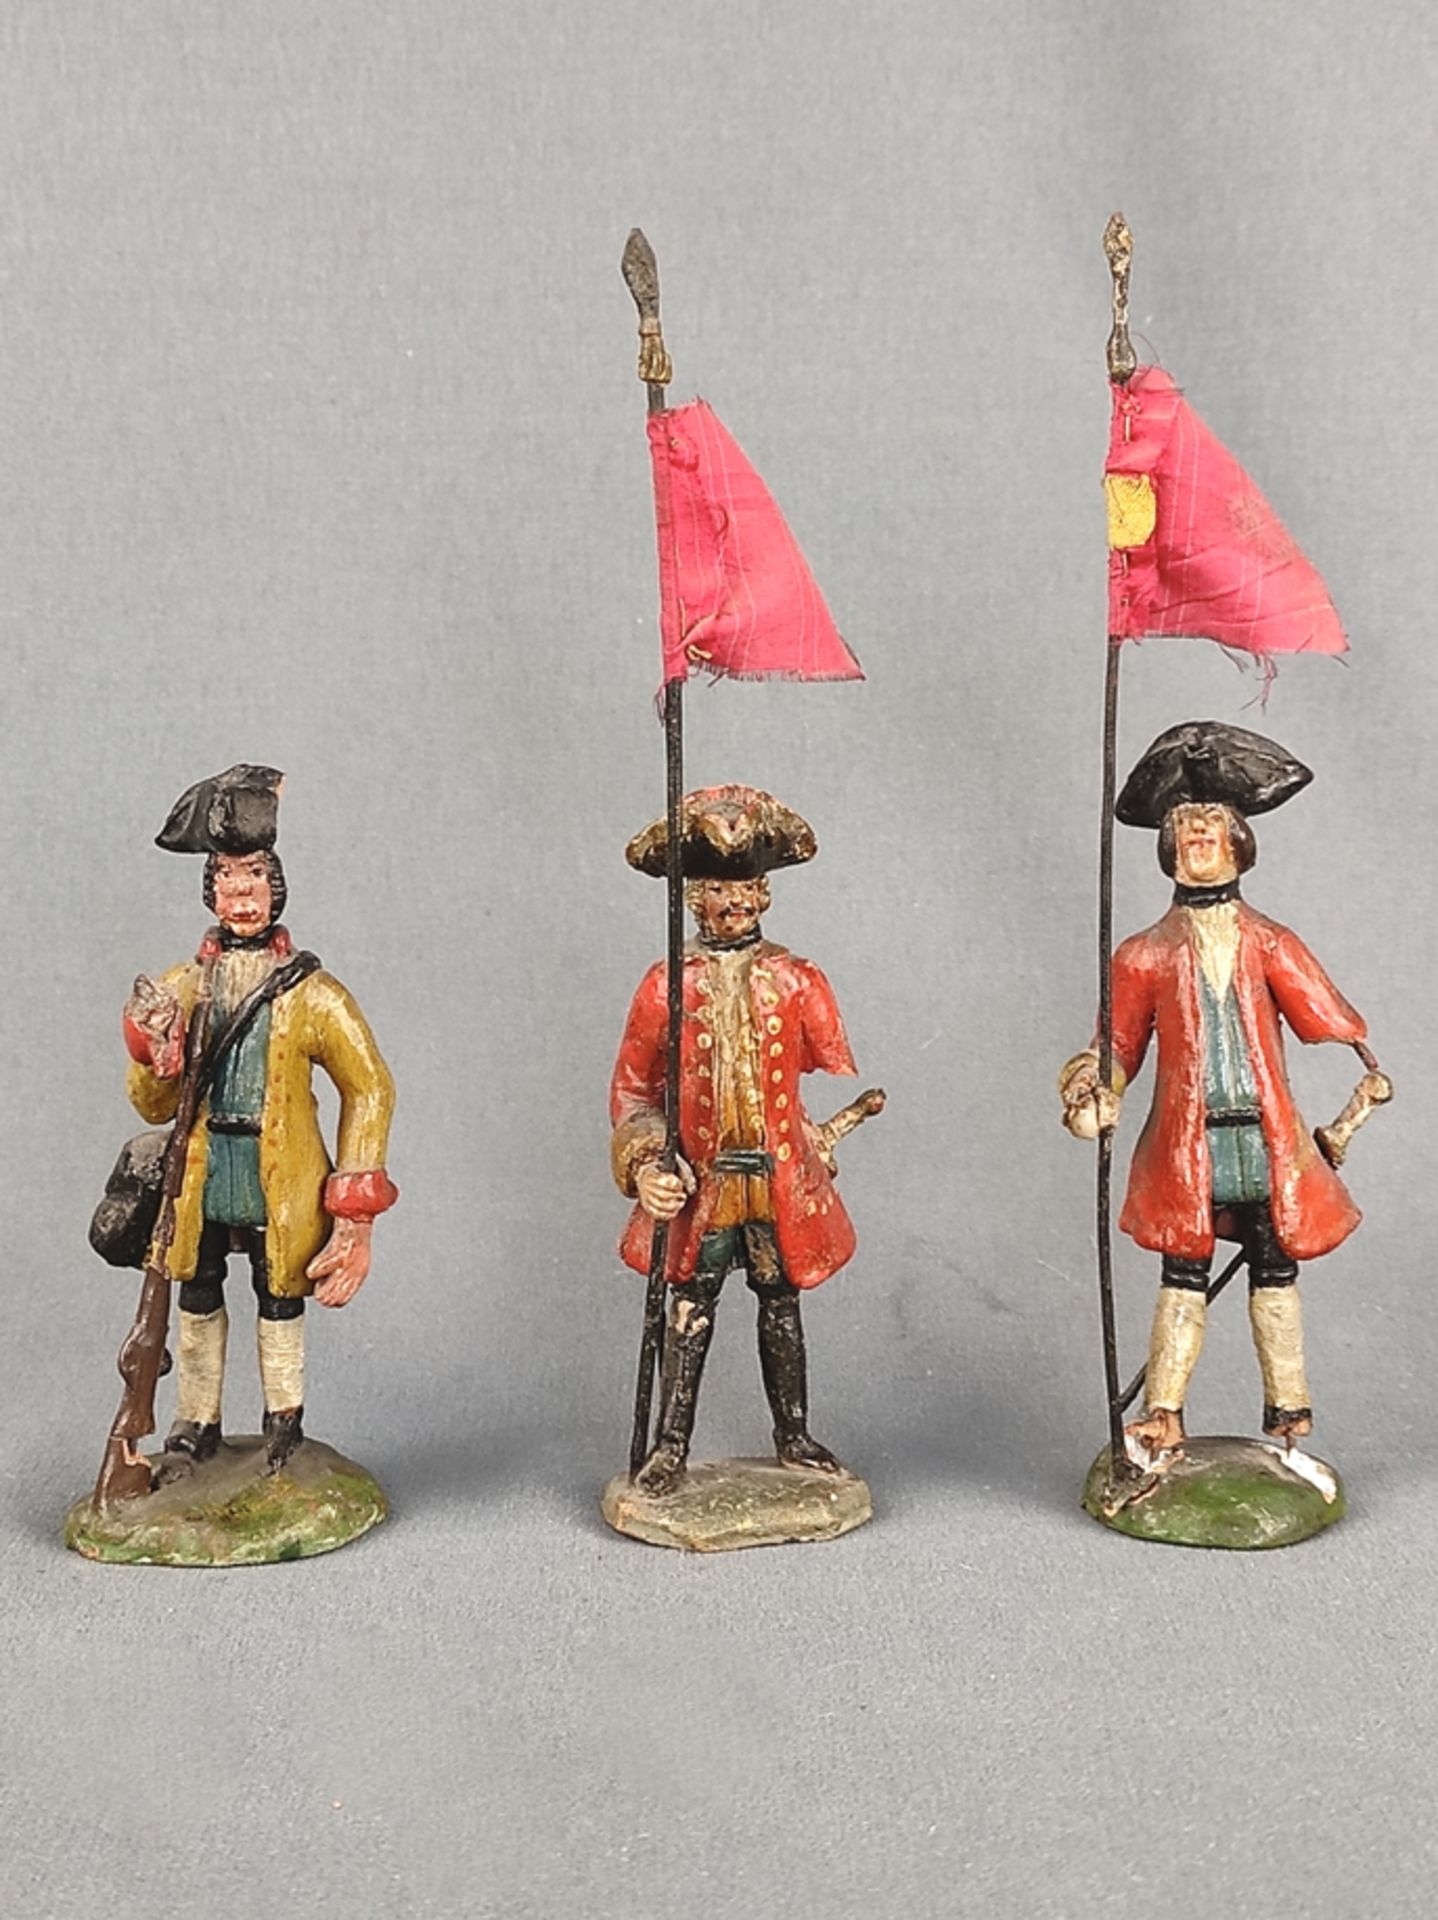 Drei Soldatenfiguren, 19. Jahrhundert, Terrakotta, farbig bemalt, Höhe (mit Flaggen) 17cm, teilweis